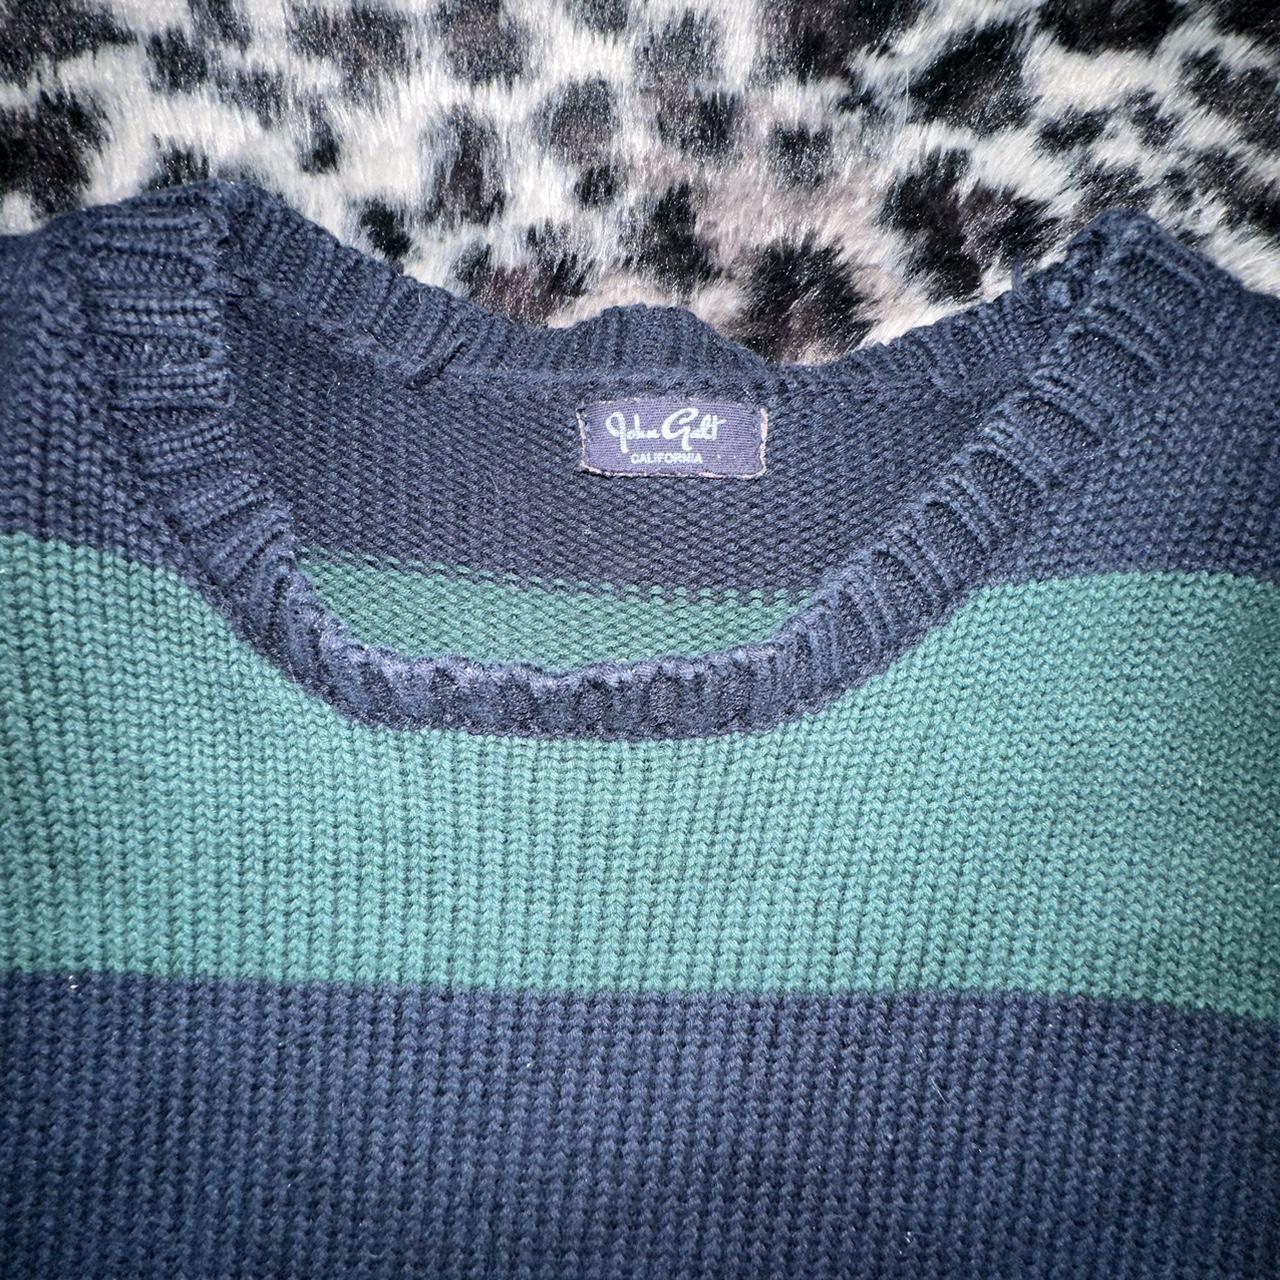 Tate” sweater Brandy Melville Has a few loose - Depop